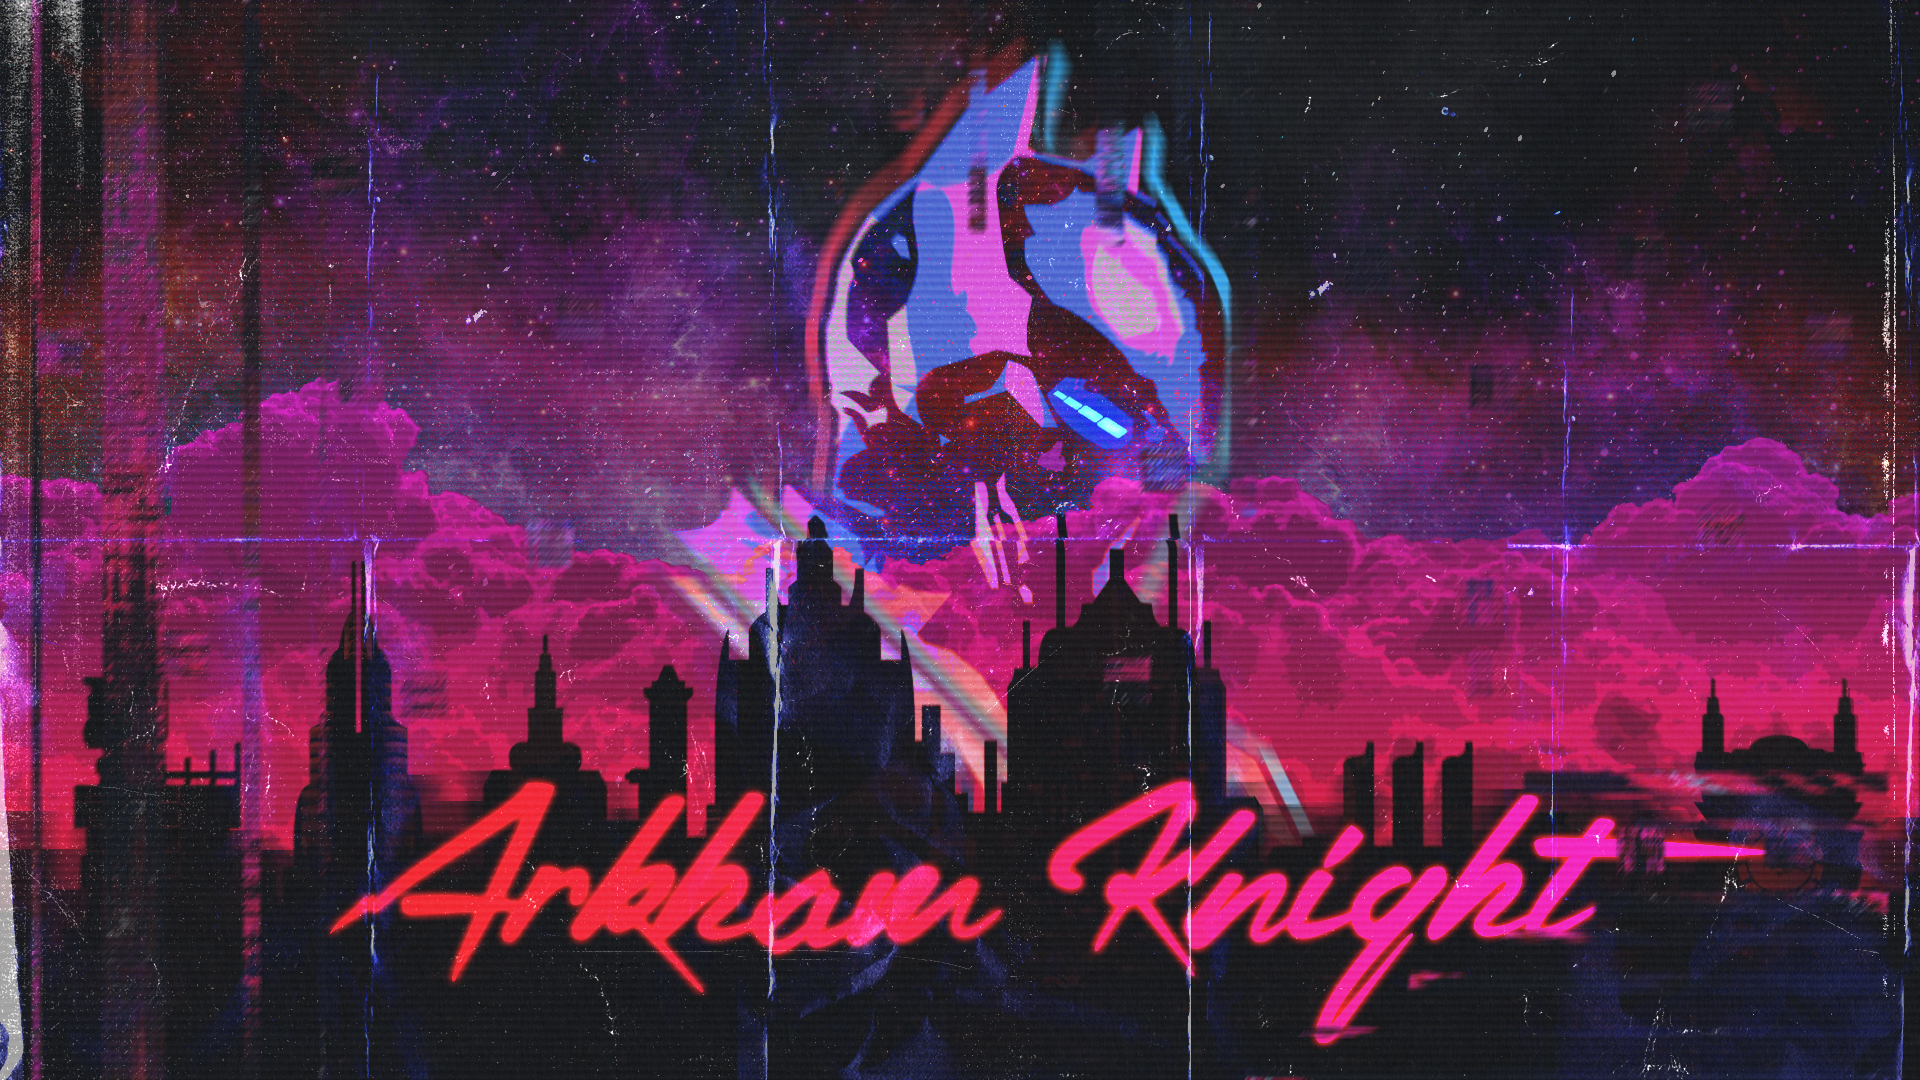 Retro Arkham Knight. Batman arkham knight wallpaper, Arkham knight, Retro image